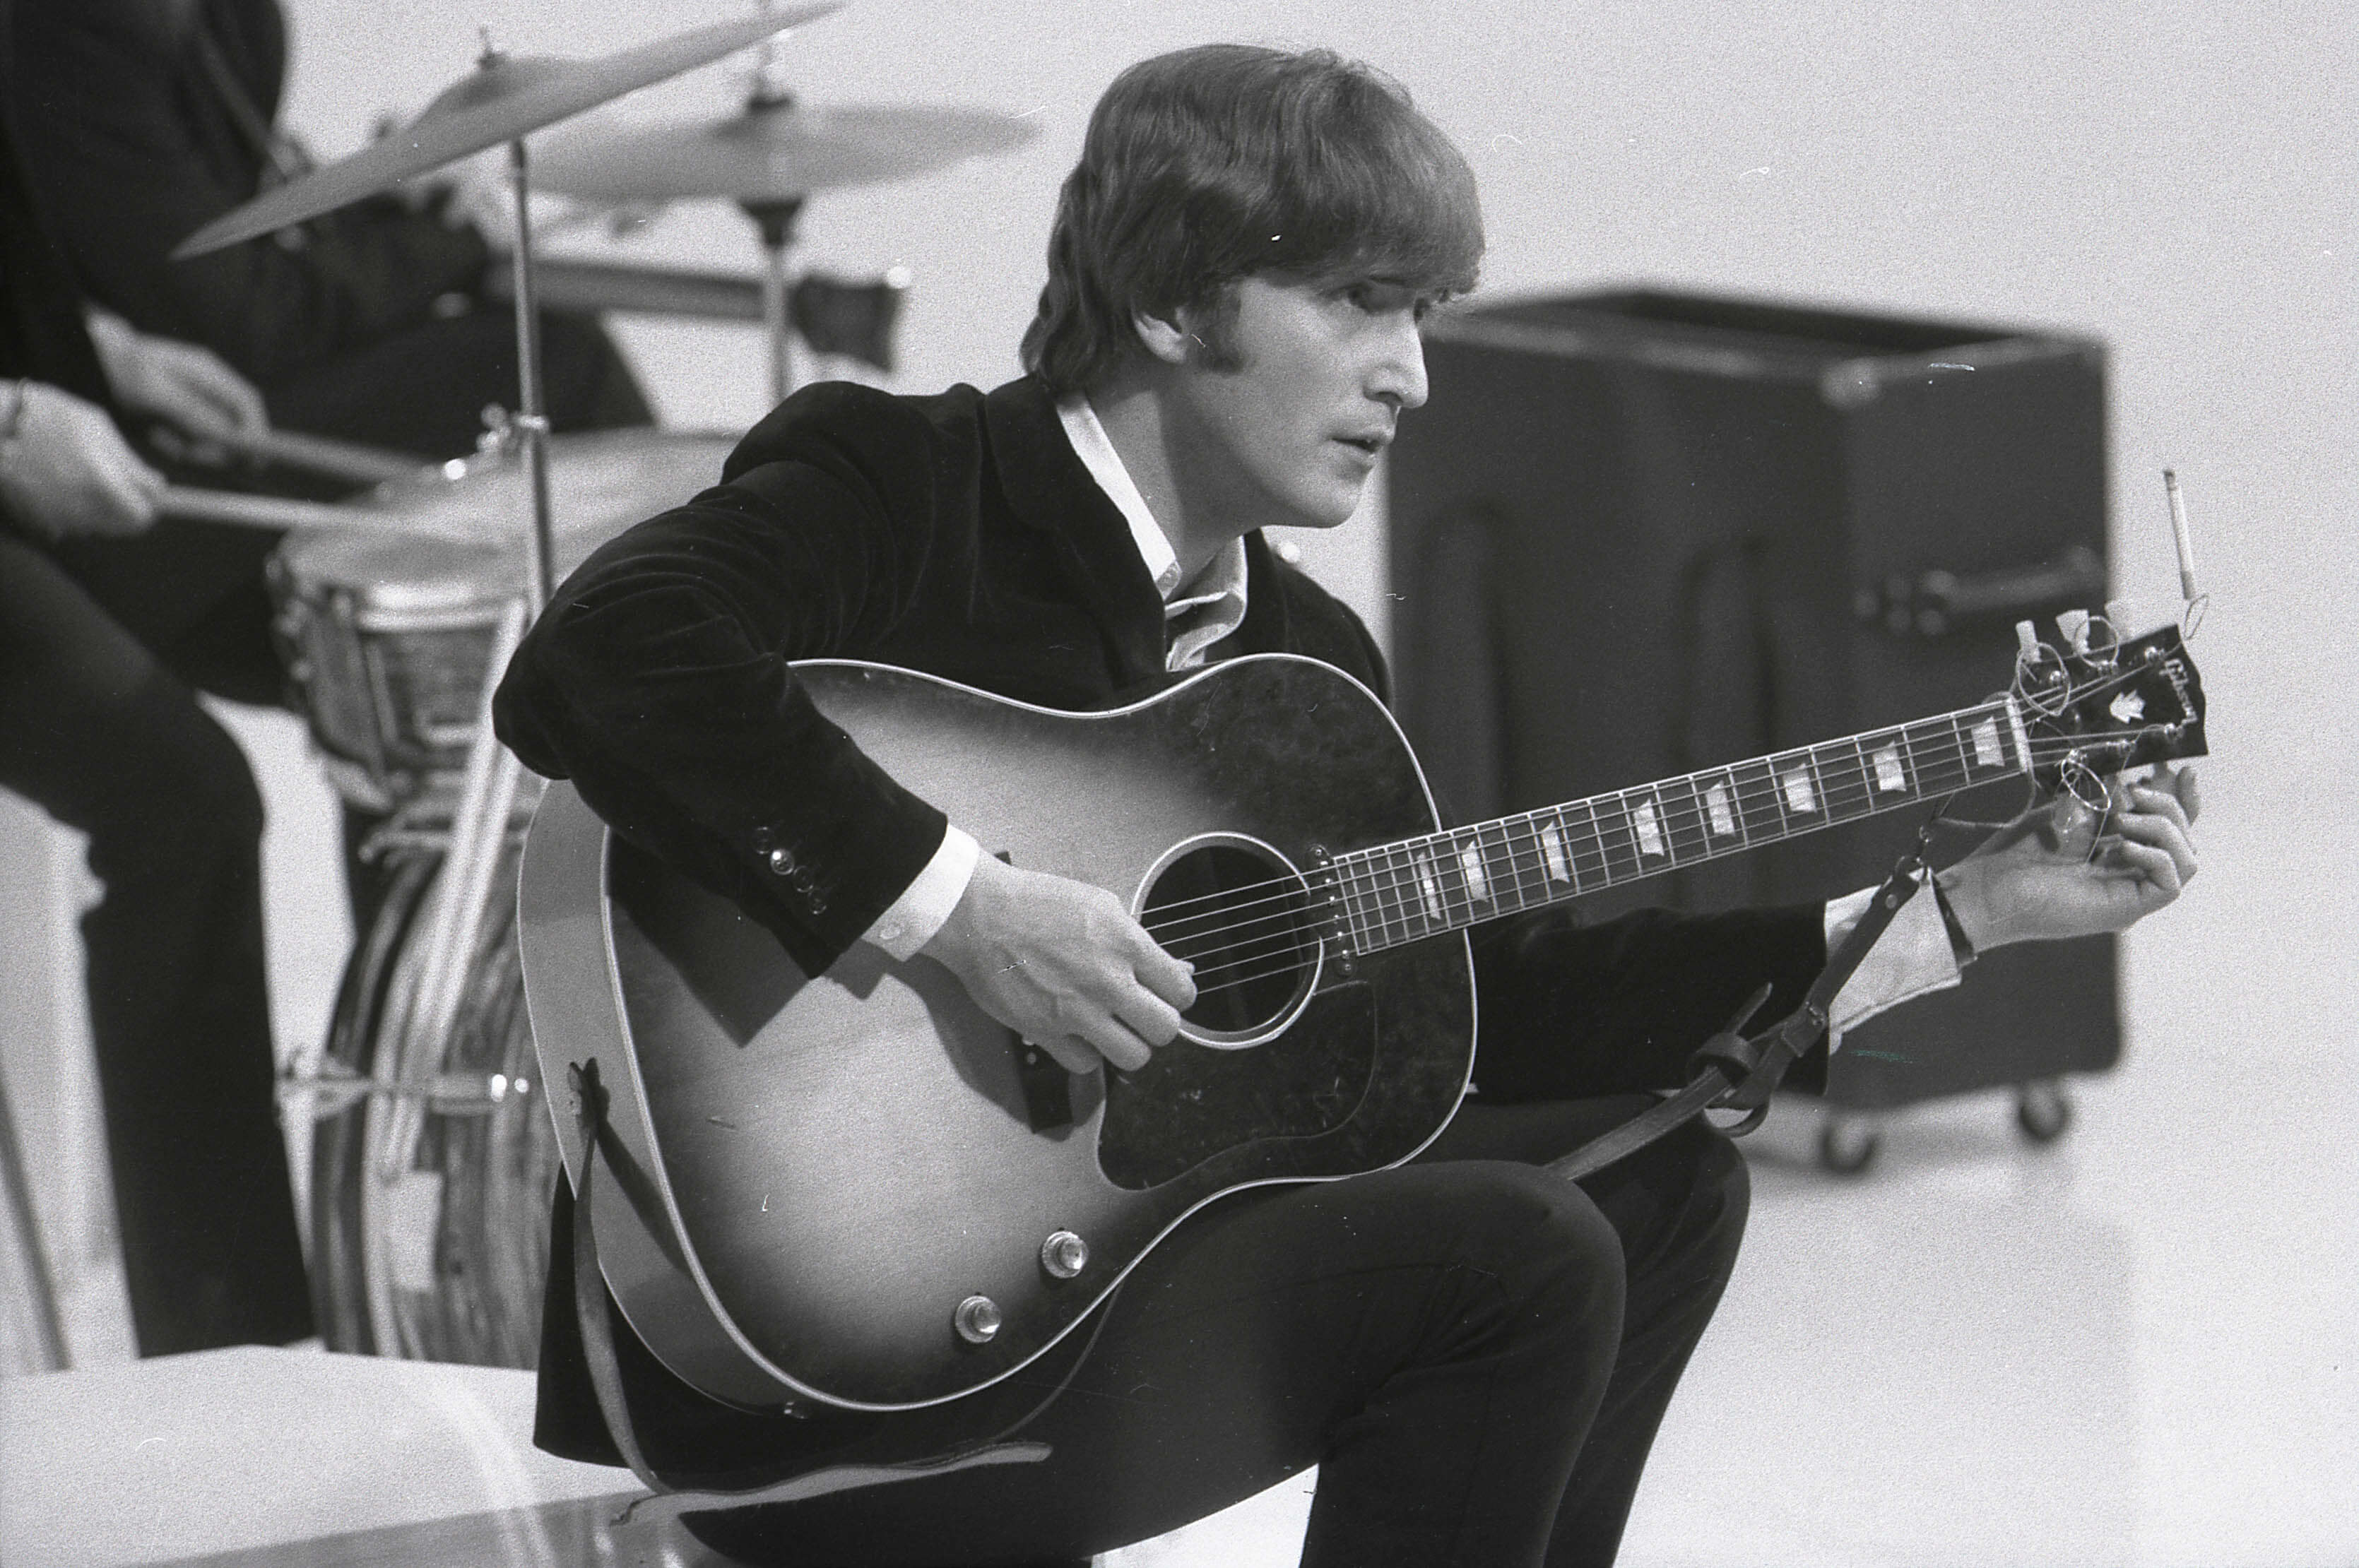 John Lennon with a guitar during The Beatles' 'Dear Prudence" era